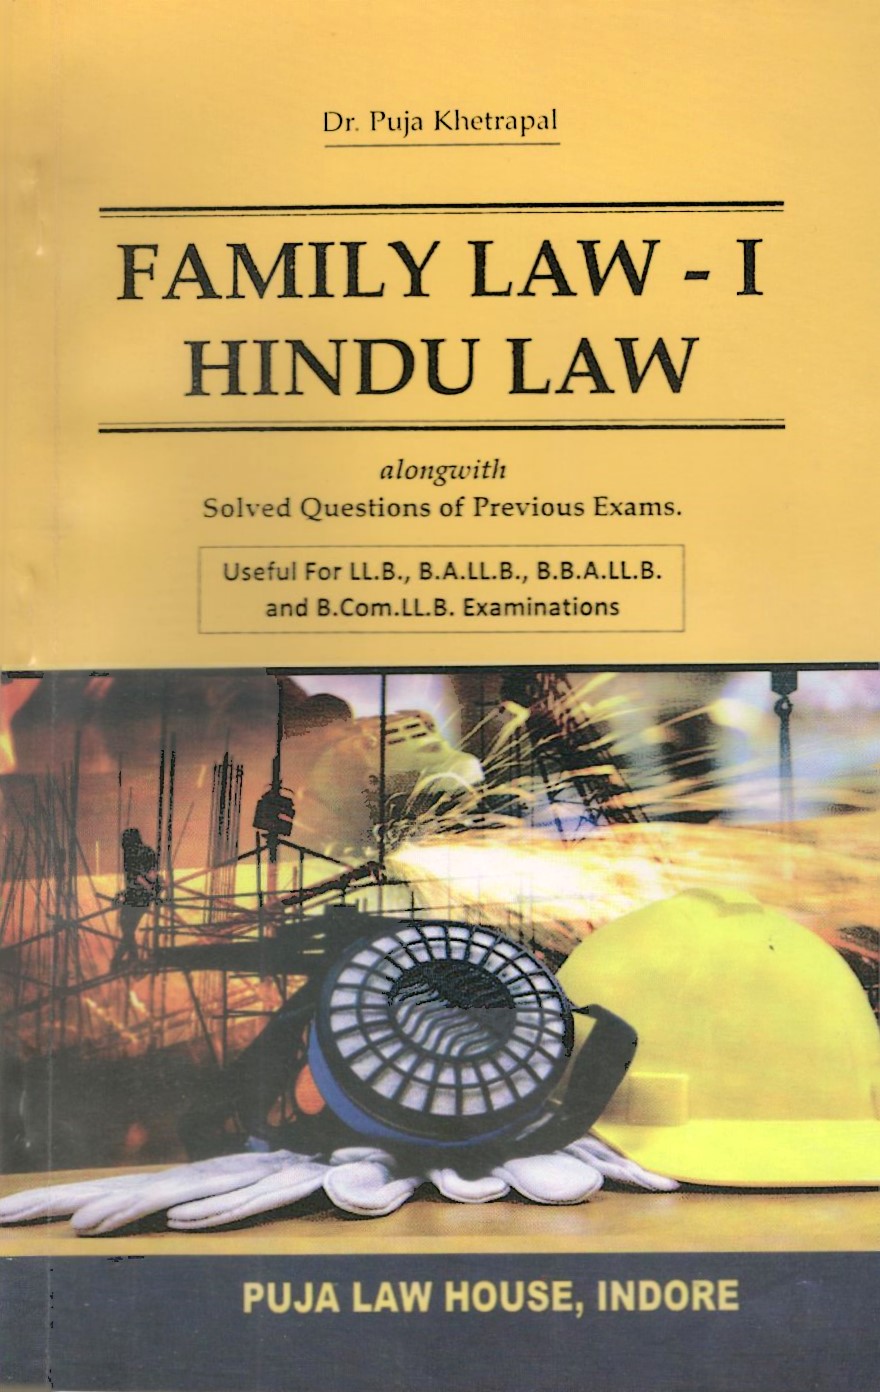 Family Law - I HINDU LAW